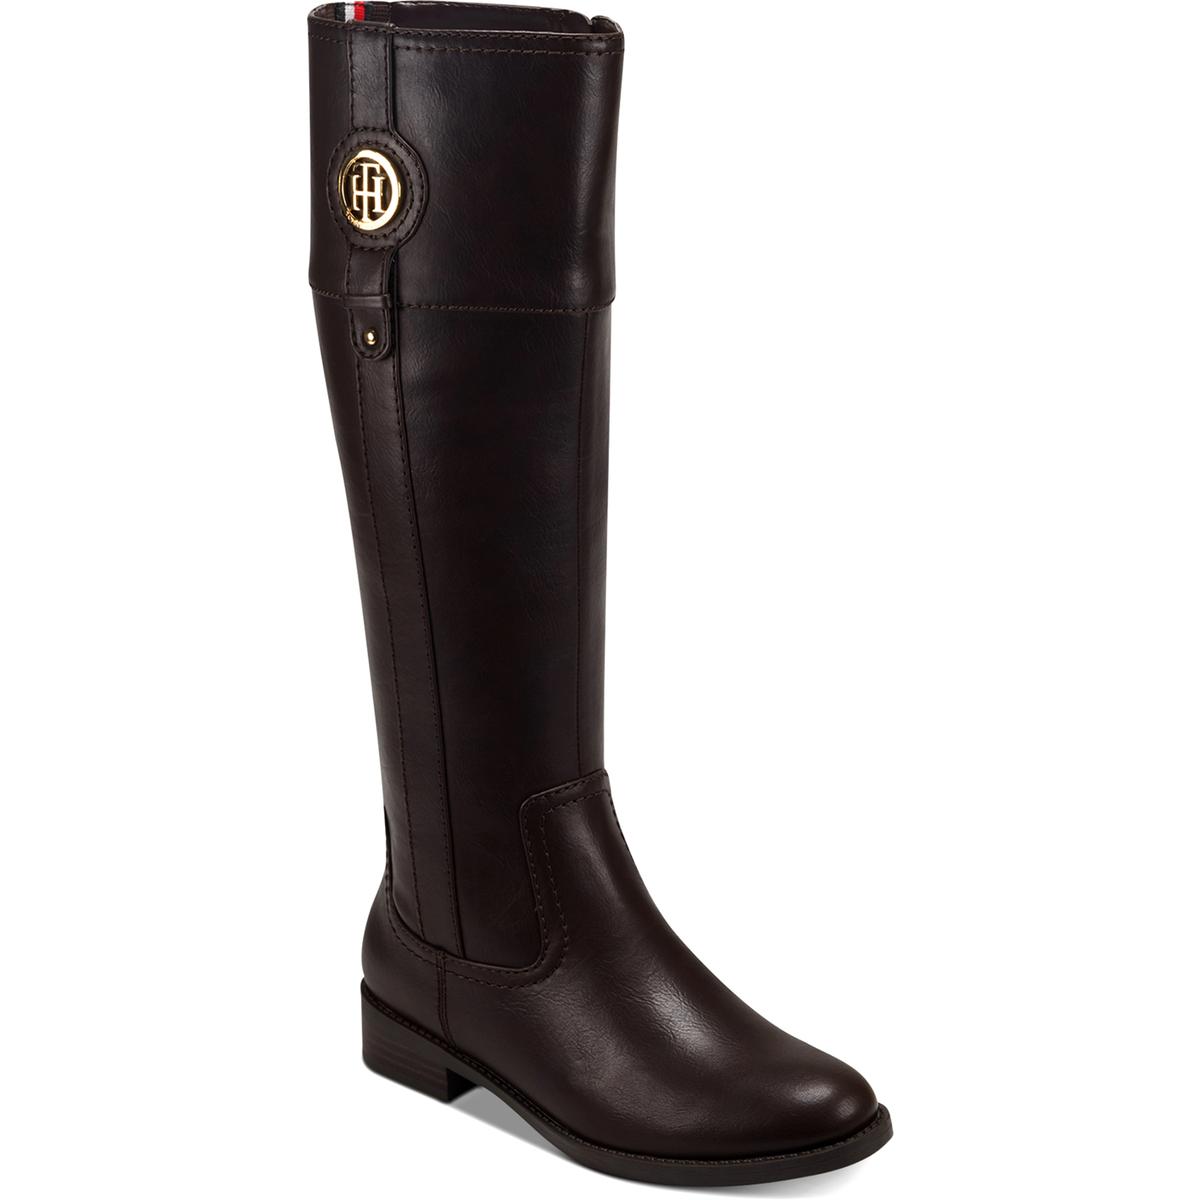 Tommy Hilfiger Womens Brown Riding Boots Shoes 6 Medium (B,M) BHFO 1517 ...